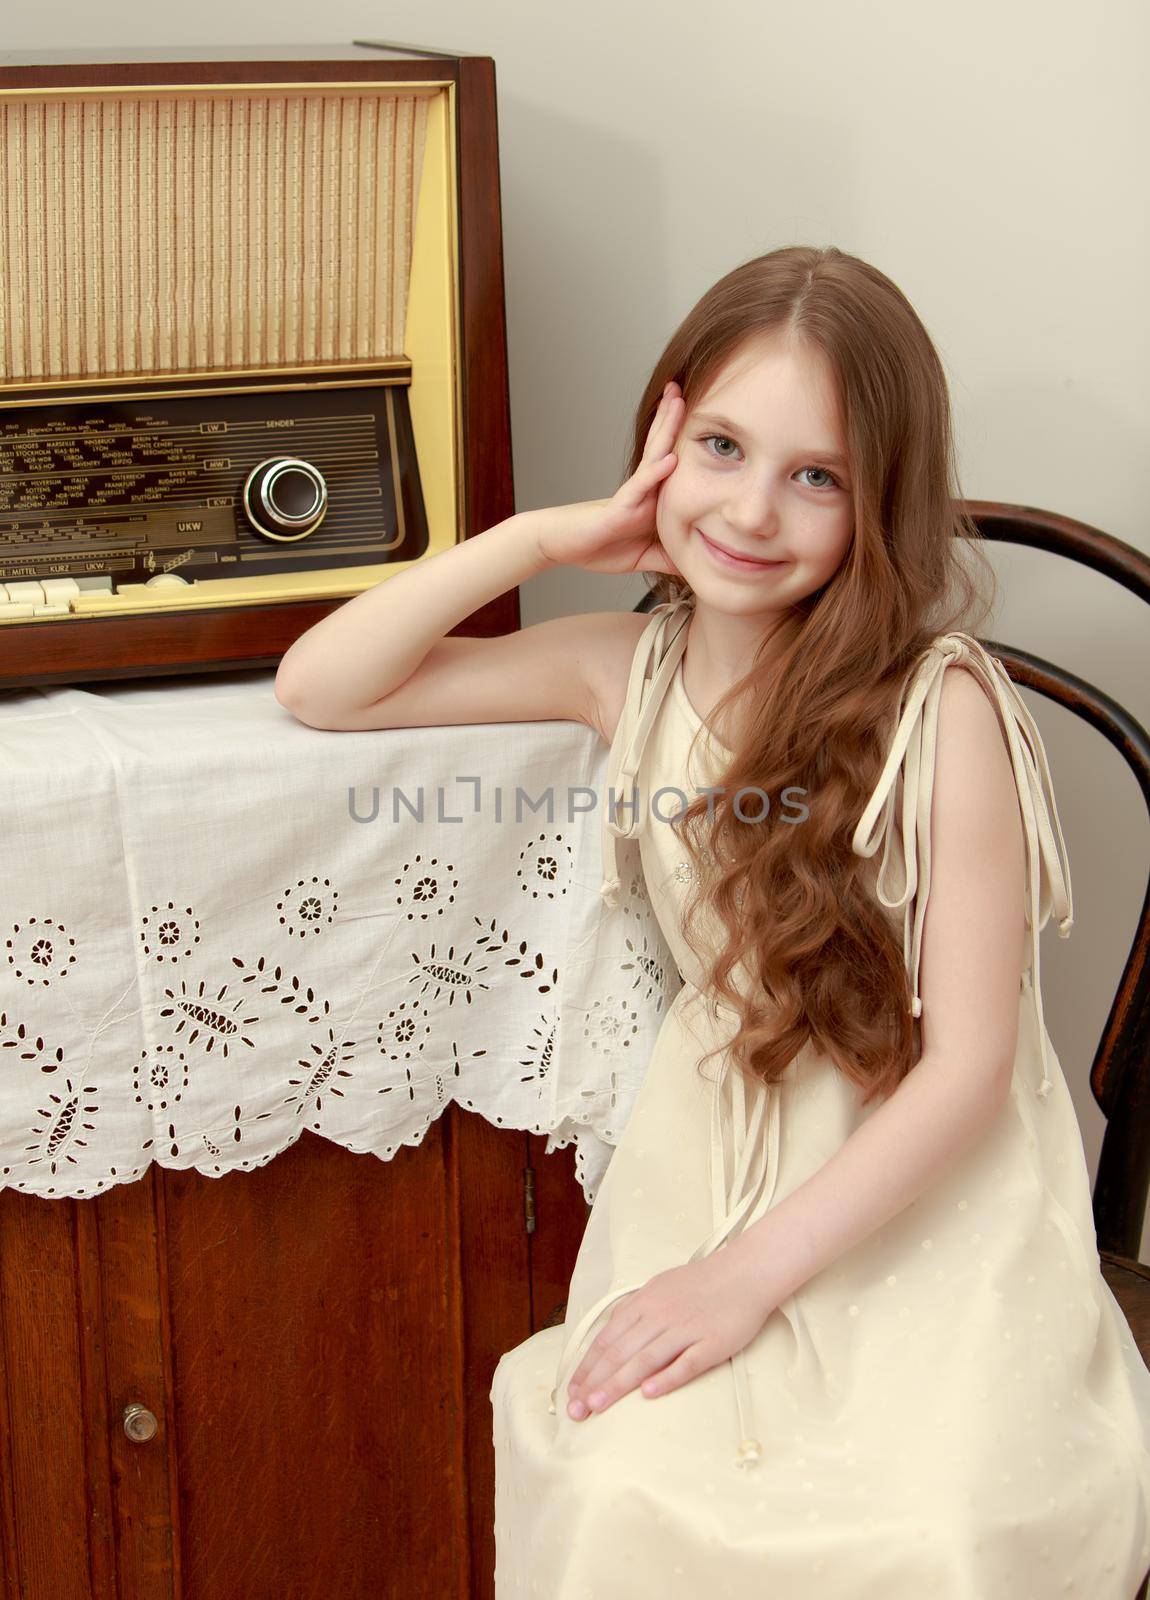 girl Listens to the radio by kolesnikov_studio